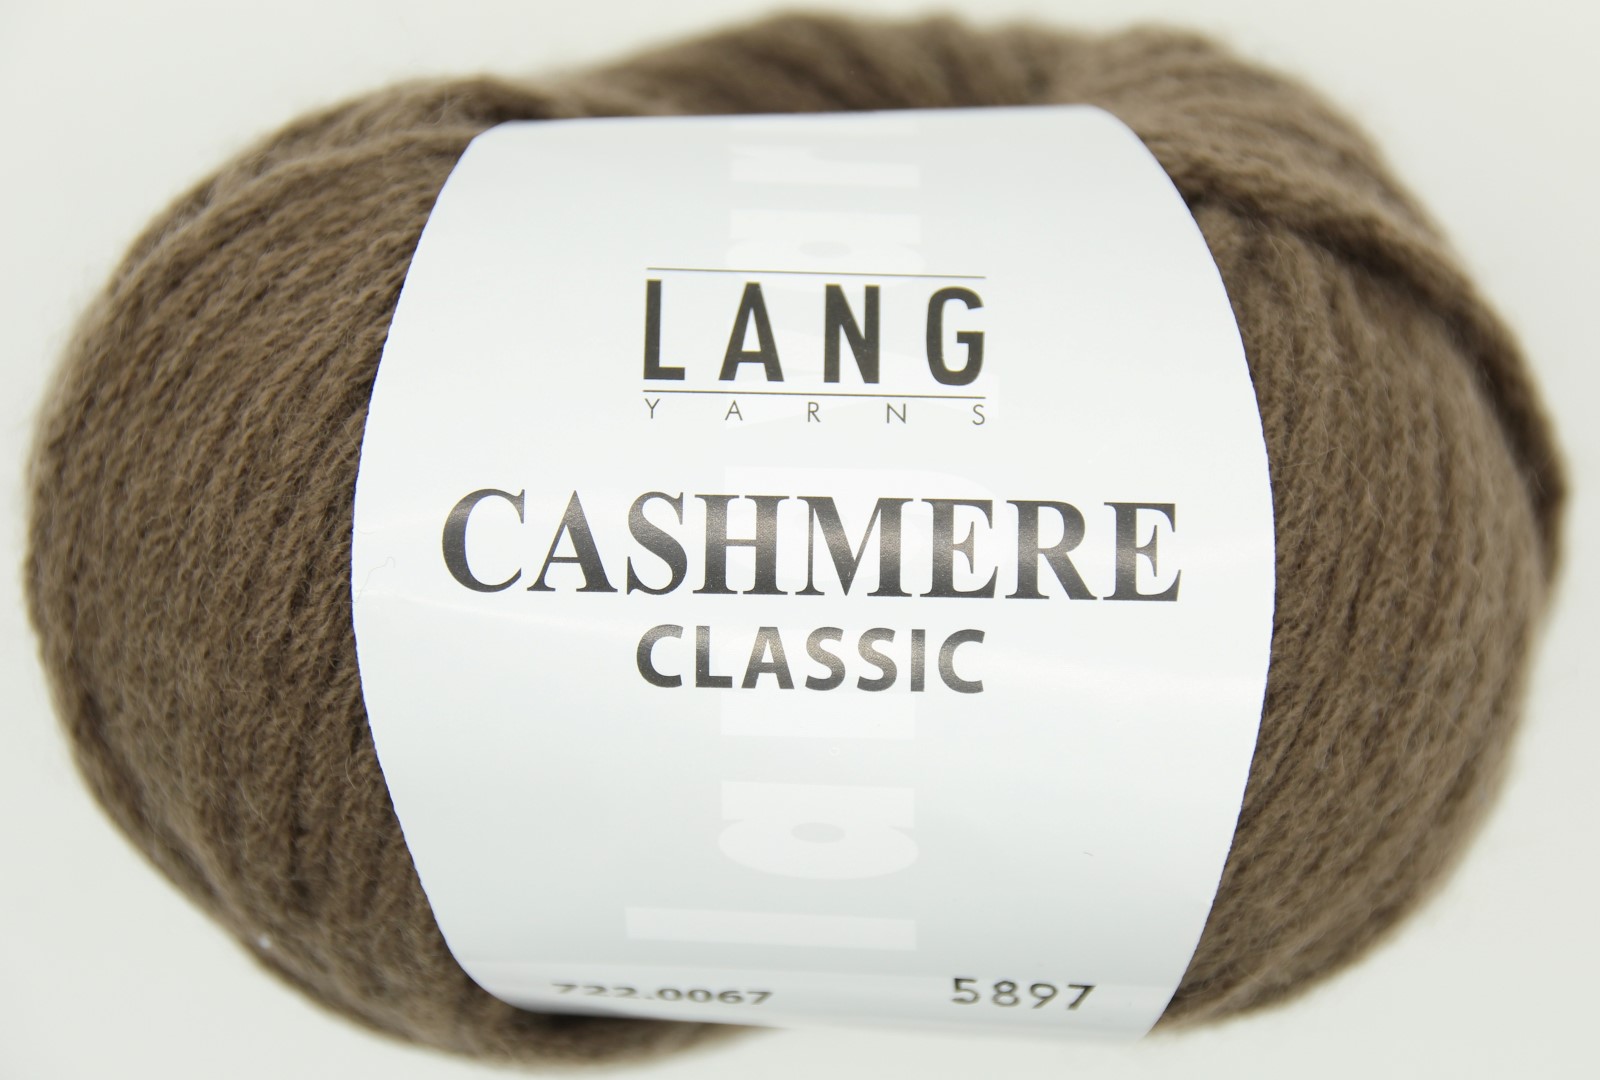 CASHMERE CLASSIC LANG YARNS COLORIS 67 (1) (Large)